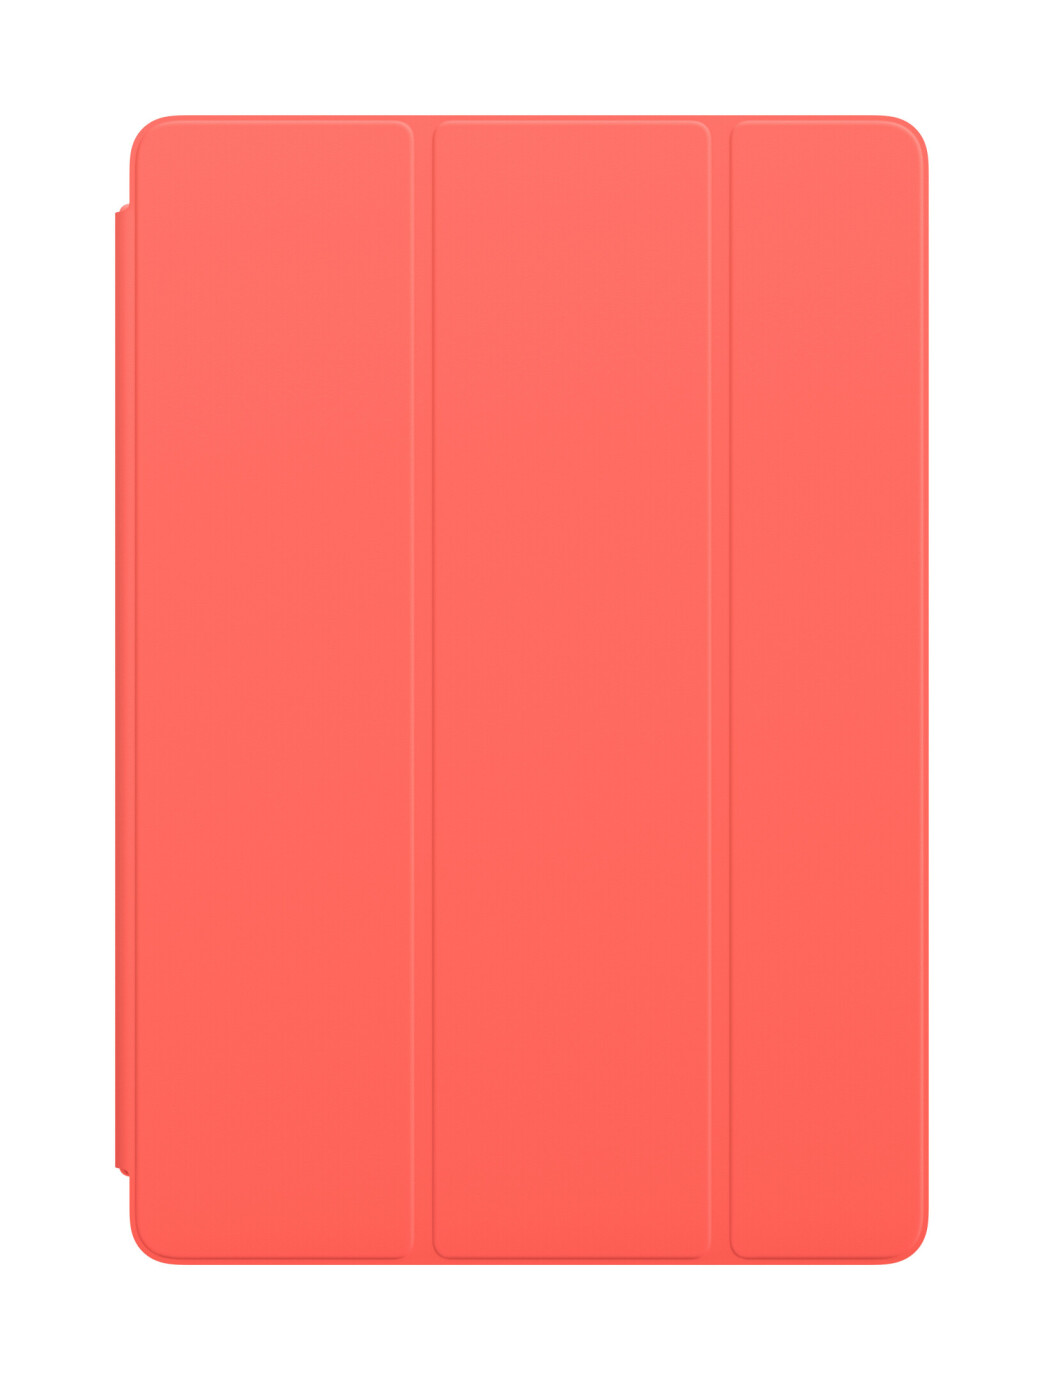 Apple Smart Cover für iPad mini (4+5. Generation) - Zitruspink